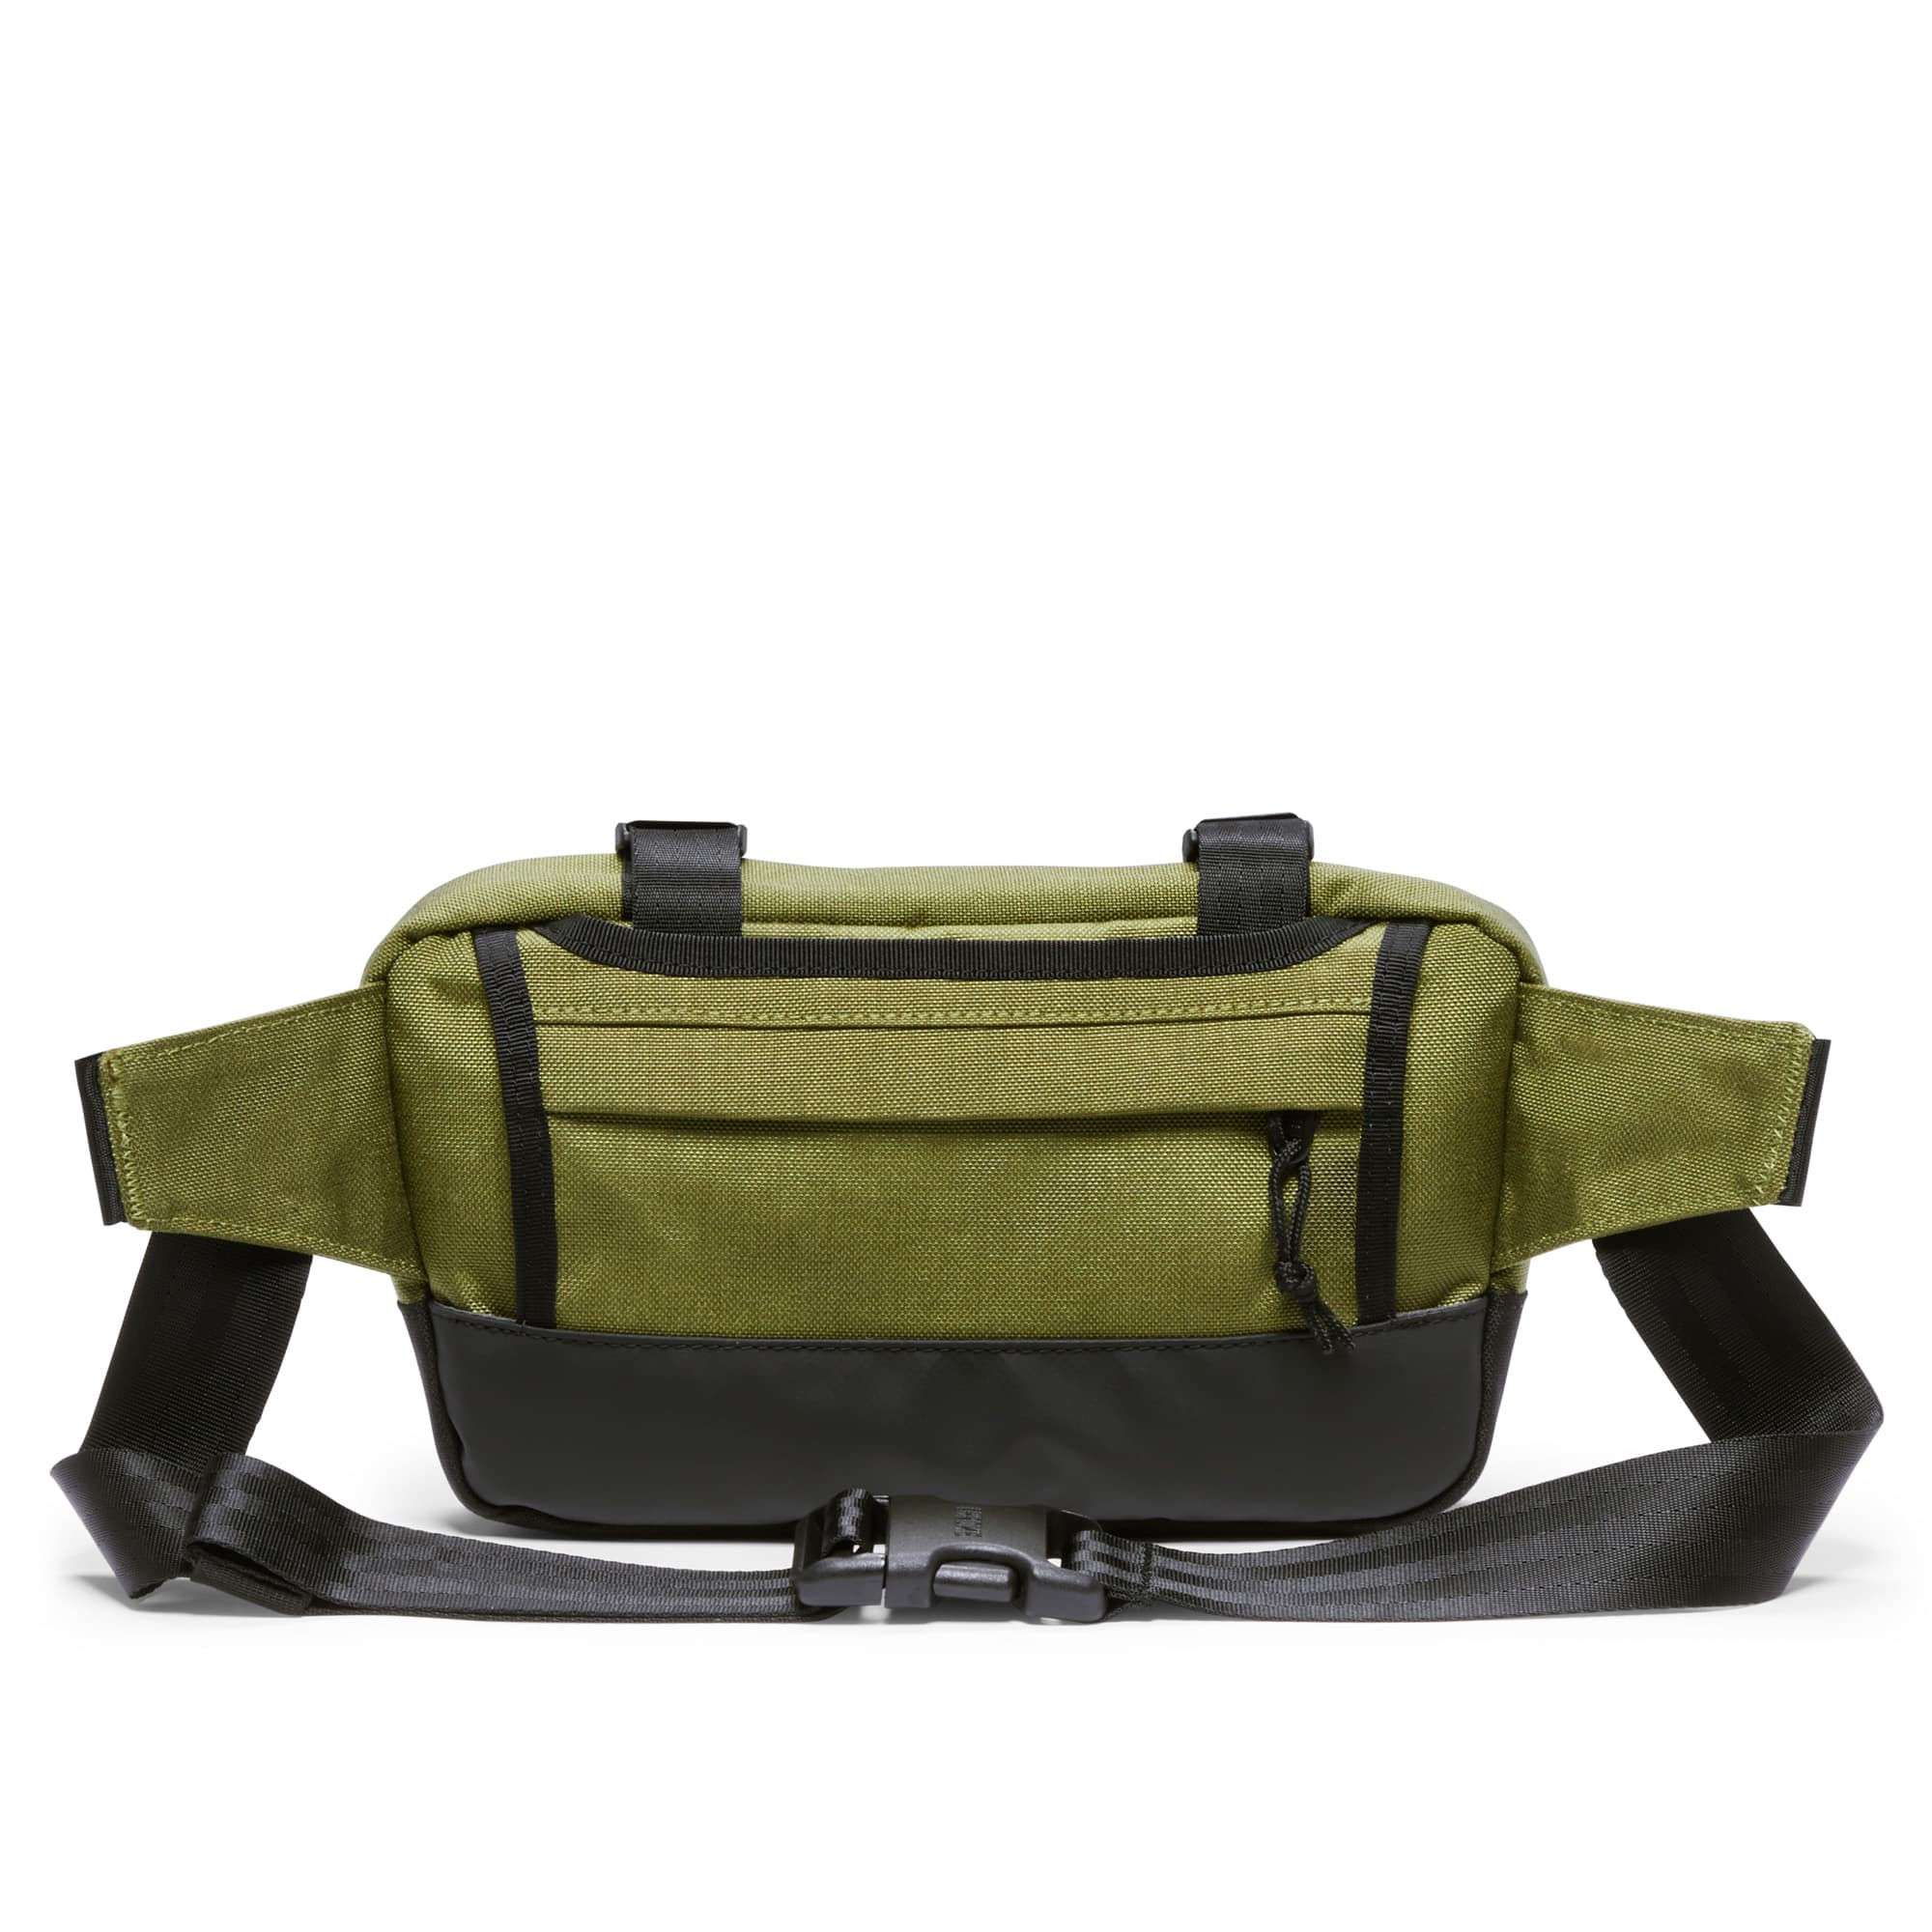 2L Doubletrack Frame Bag in green stowable sling straps #color_olive branch